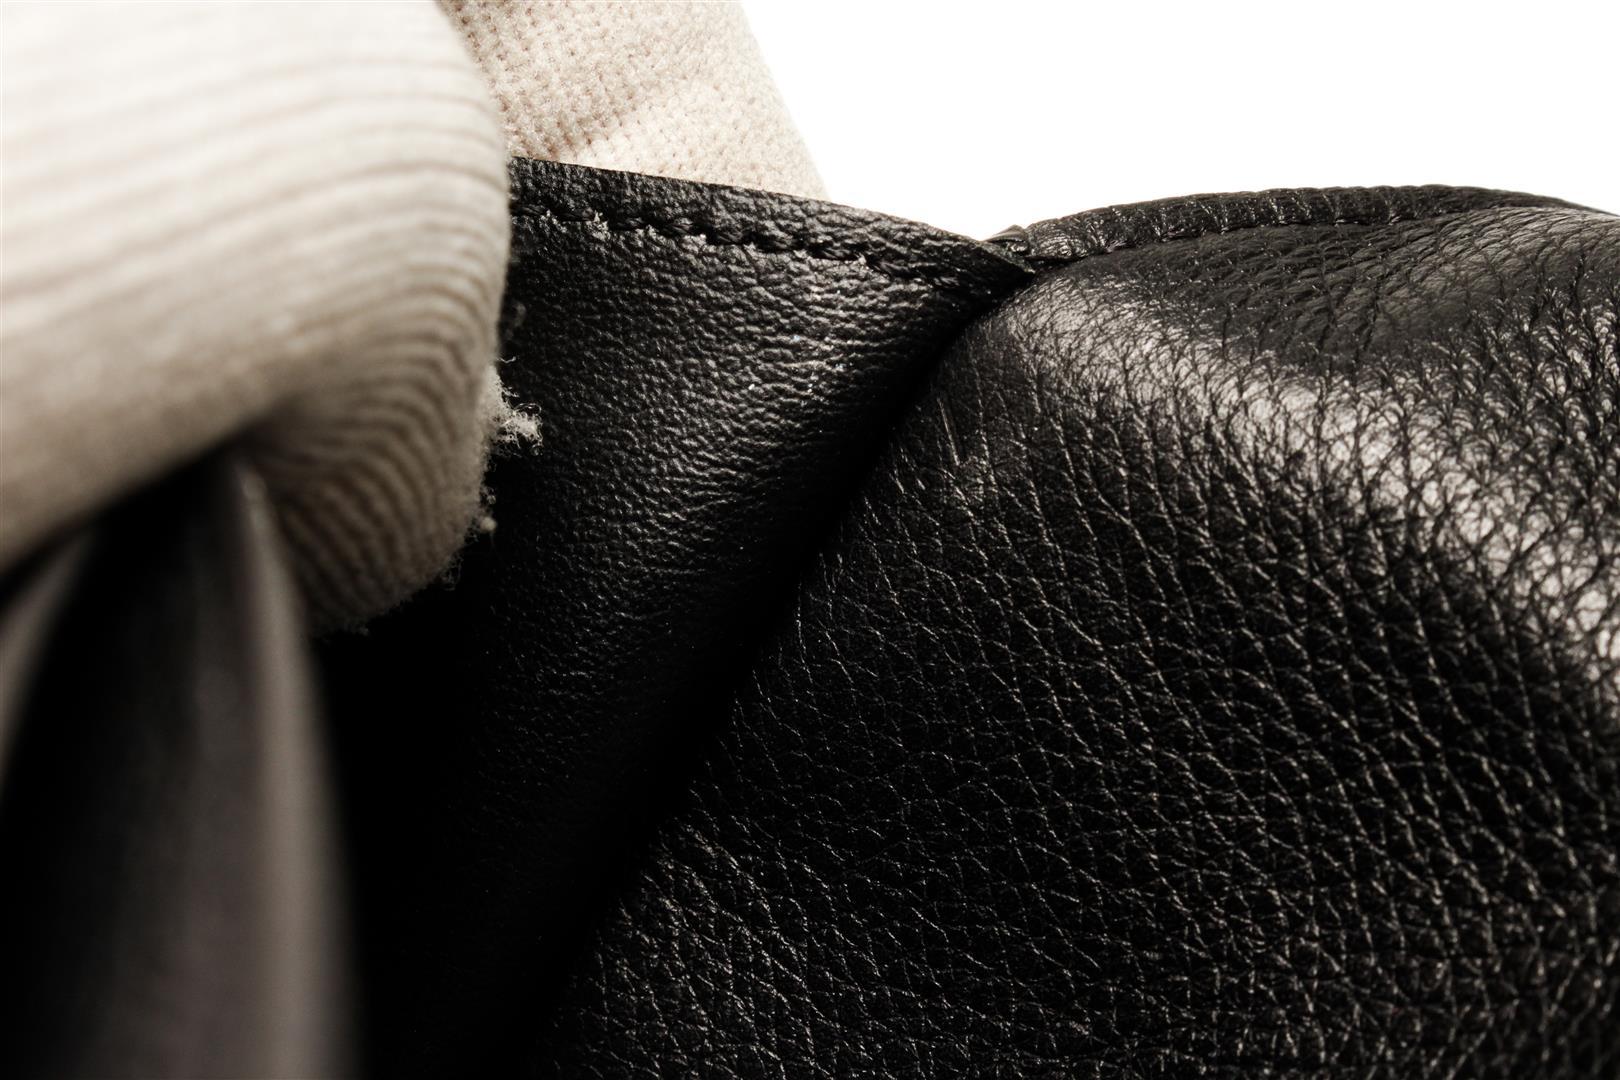 Louis Vuitton Black Leather Brazza Wallet